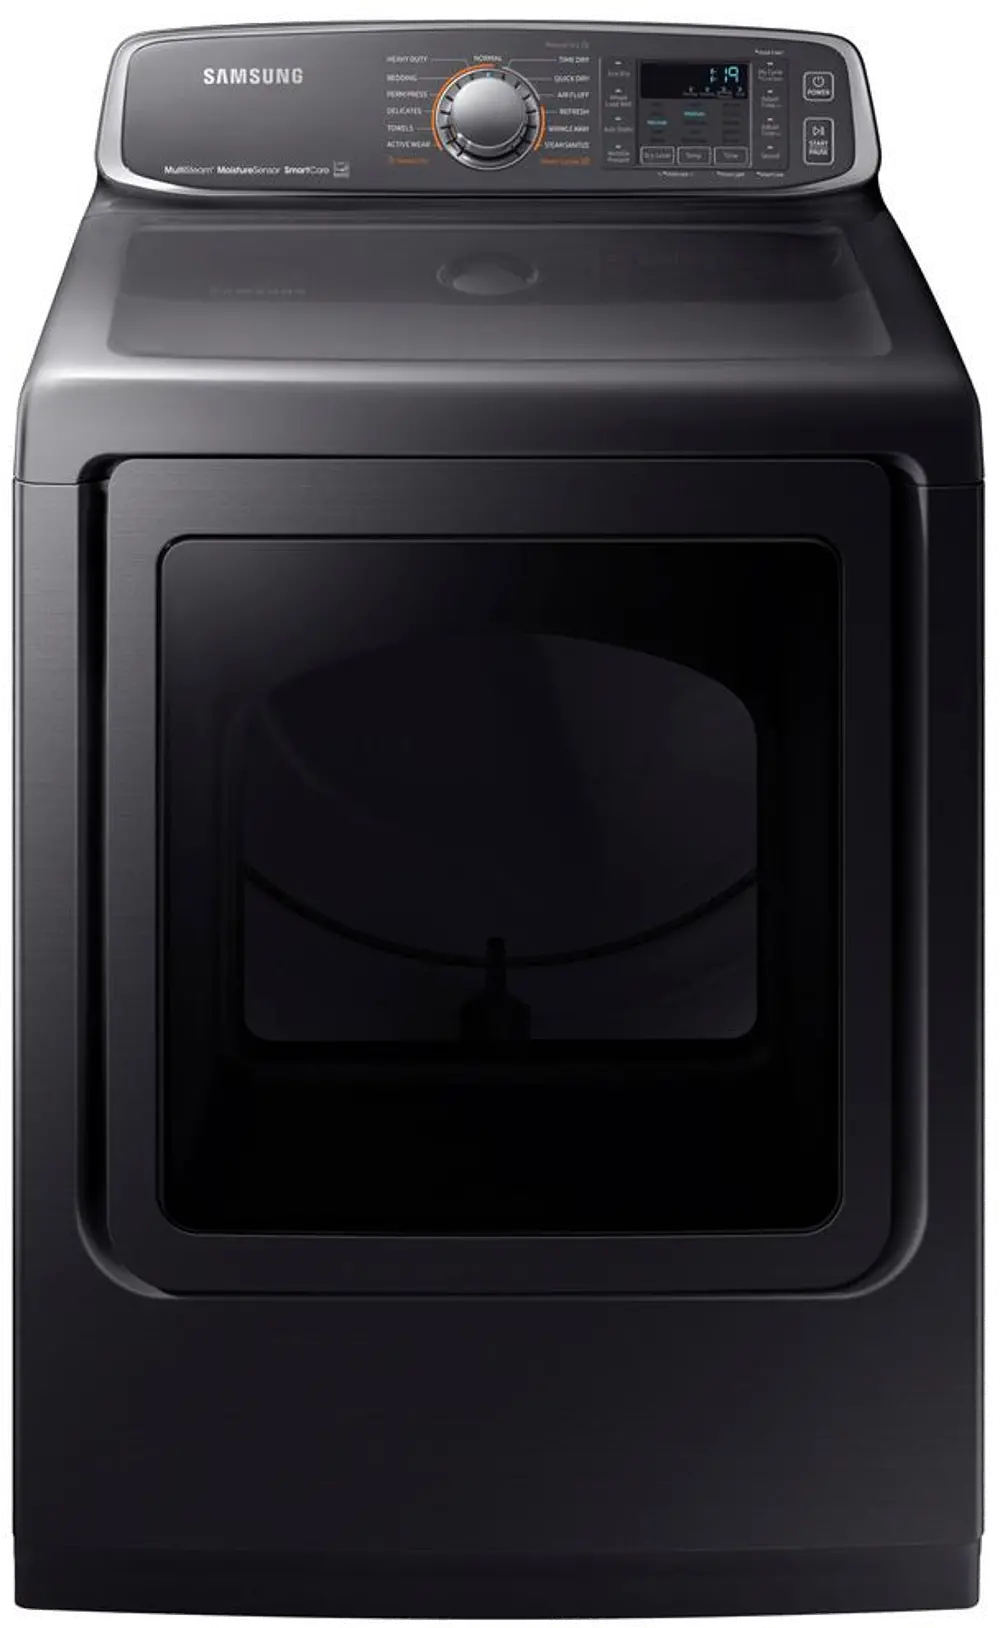 DVG52M7750V Samsung Gas Eco Dry Dryer - 7.4 cu. ft. Black Stainless Steel-1